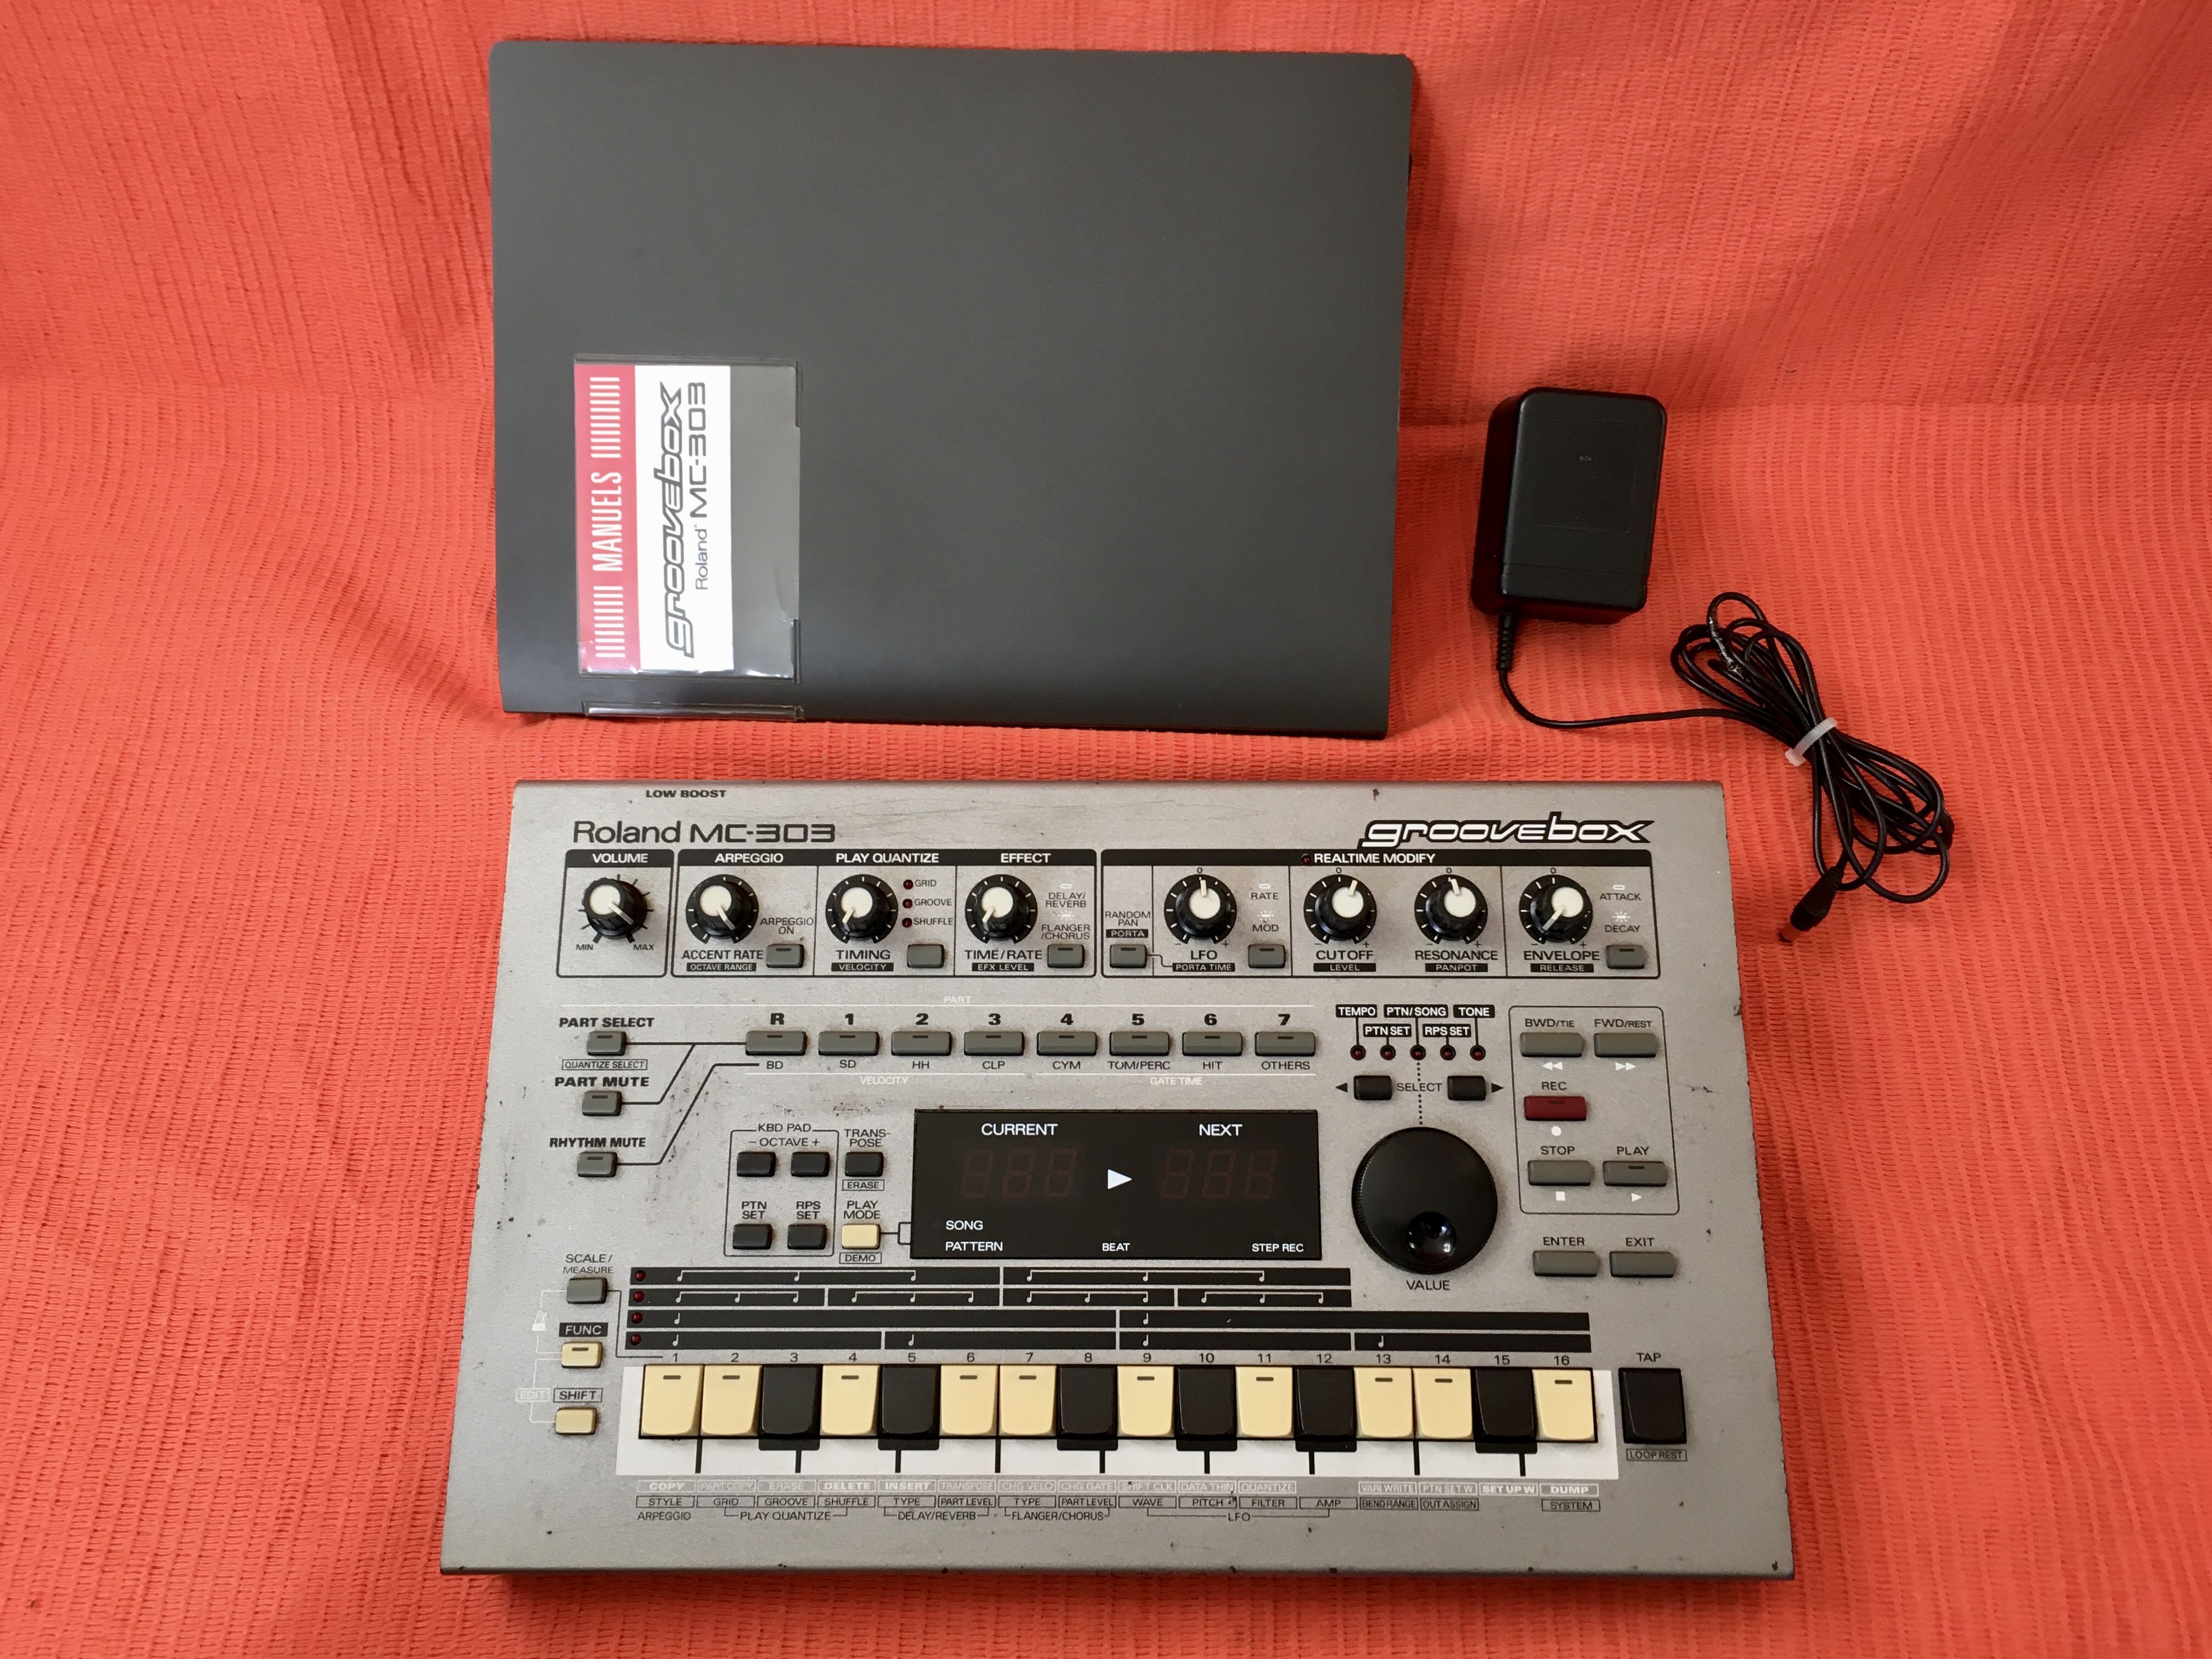 MC-303 - Roland MC-303 - Audiofanzine